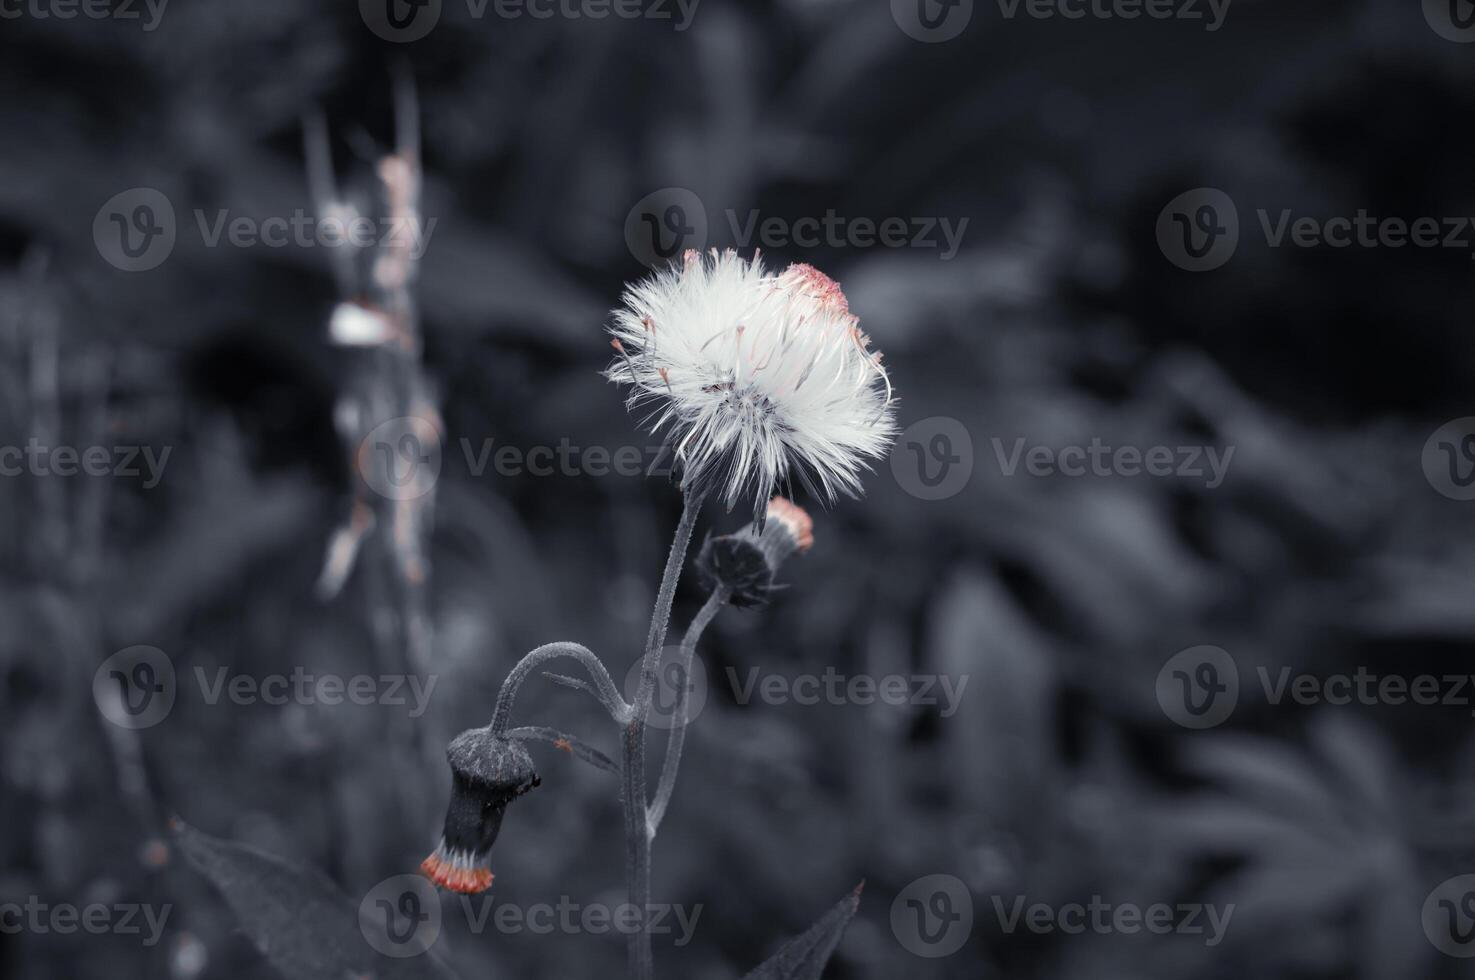 Crassocephalum crepidioides is a white wildflower photo